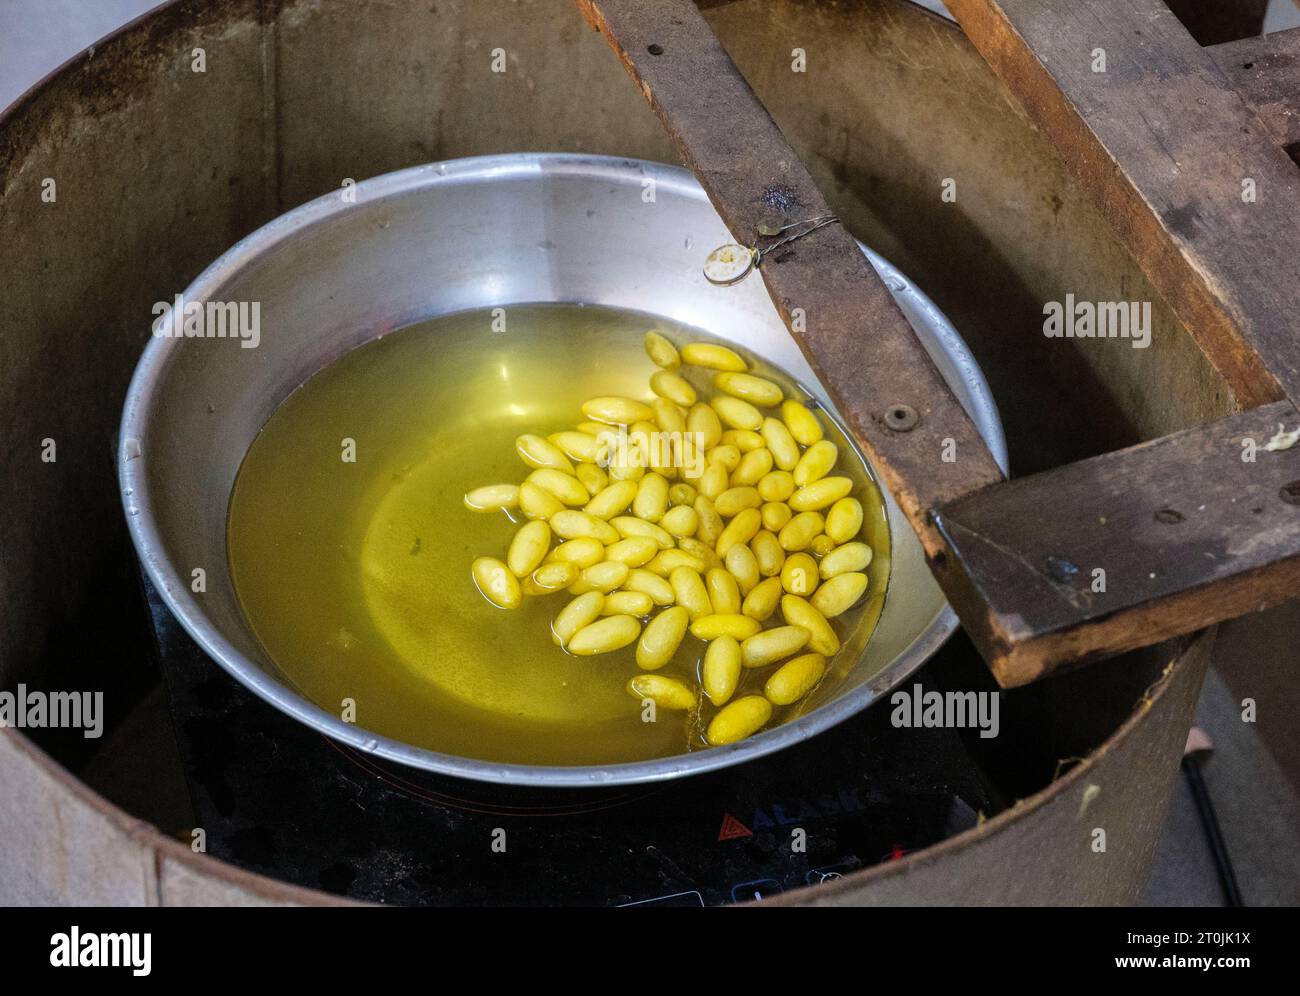 Hoi An, Vietnam. Soaking Silk Worm Cocoons in Hot Water Kills the Larva. Stock Photo